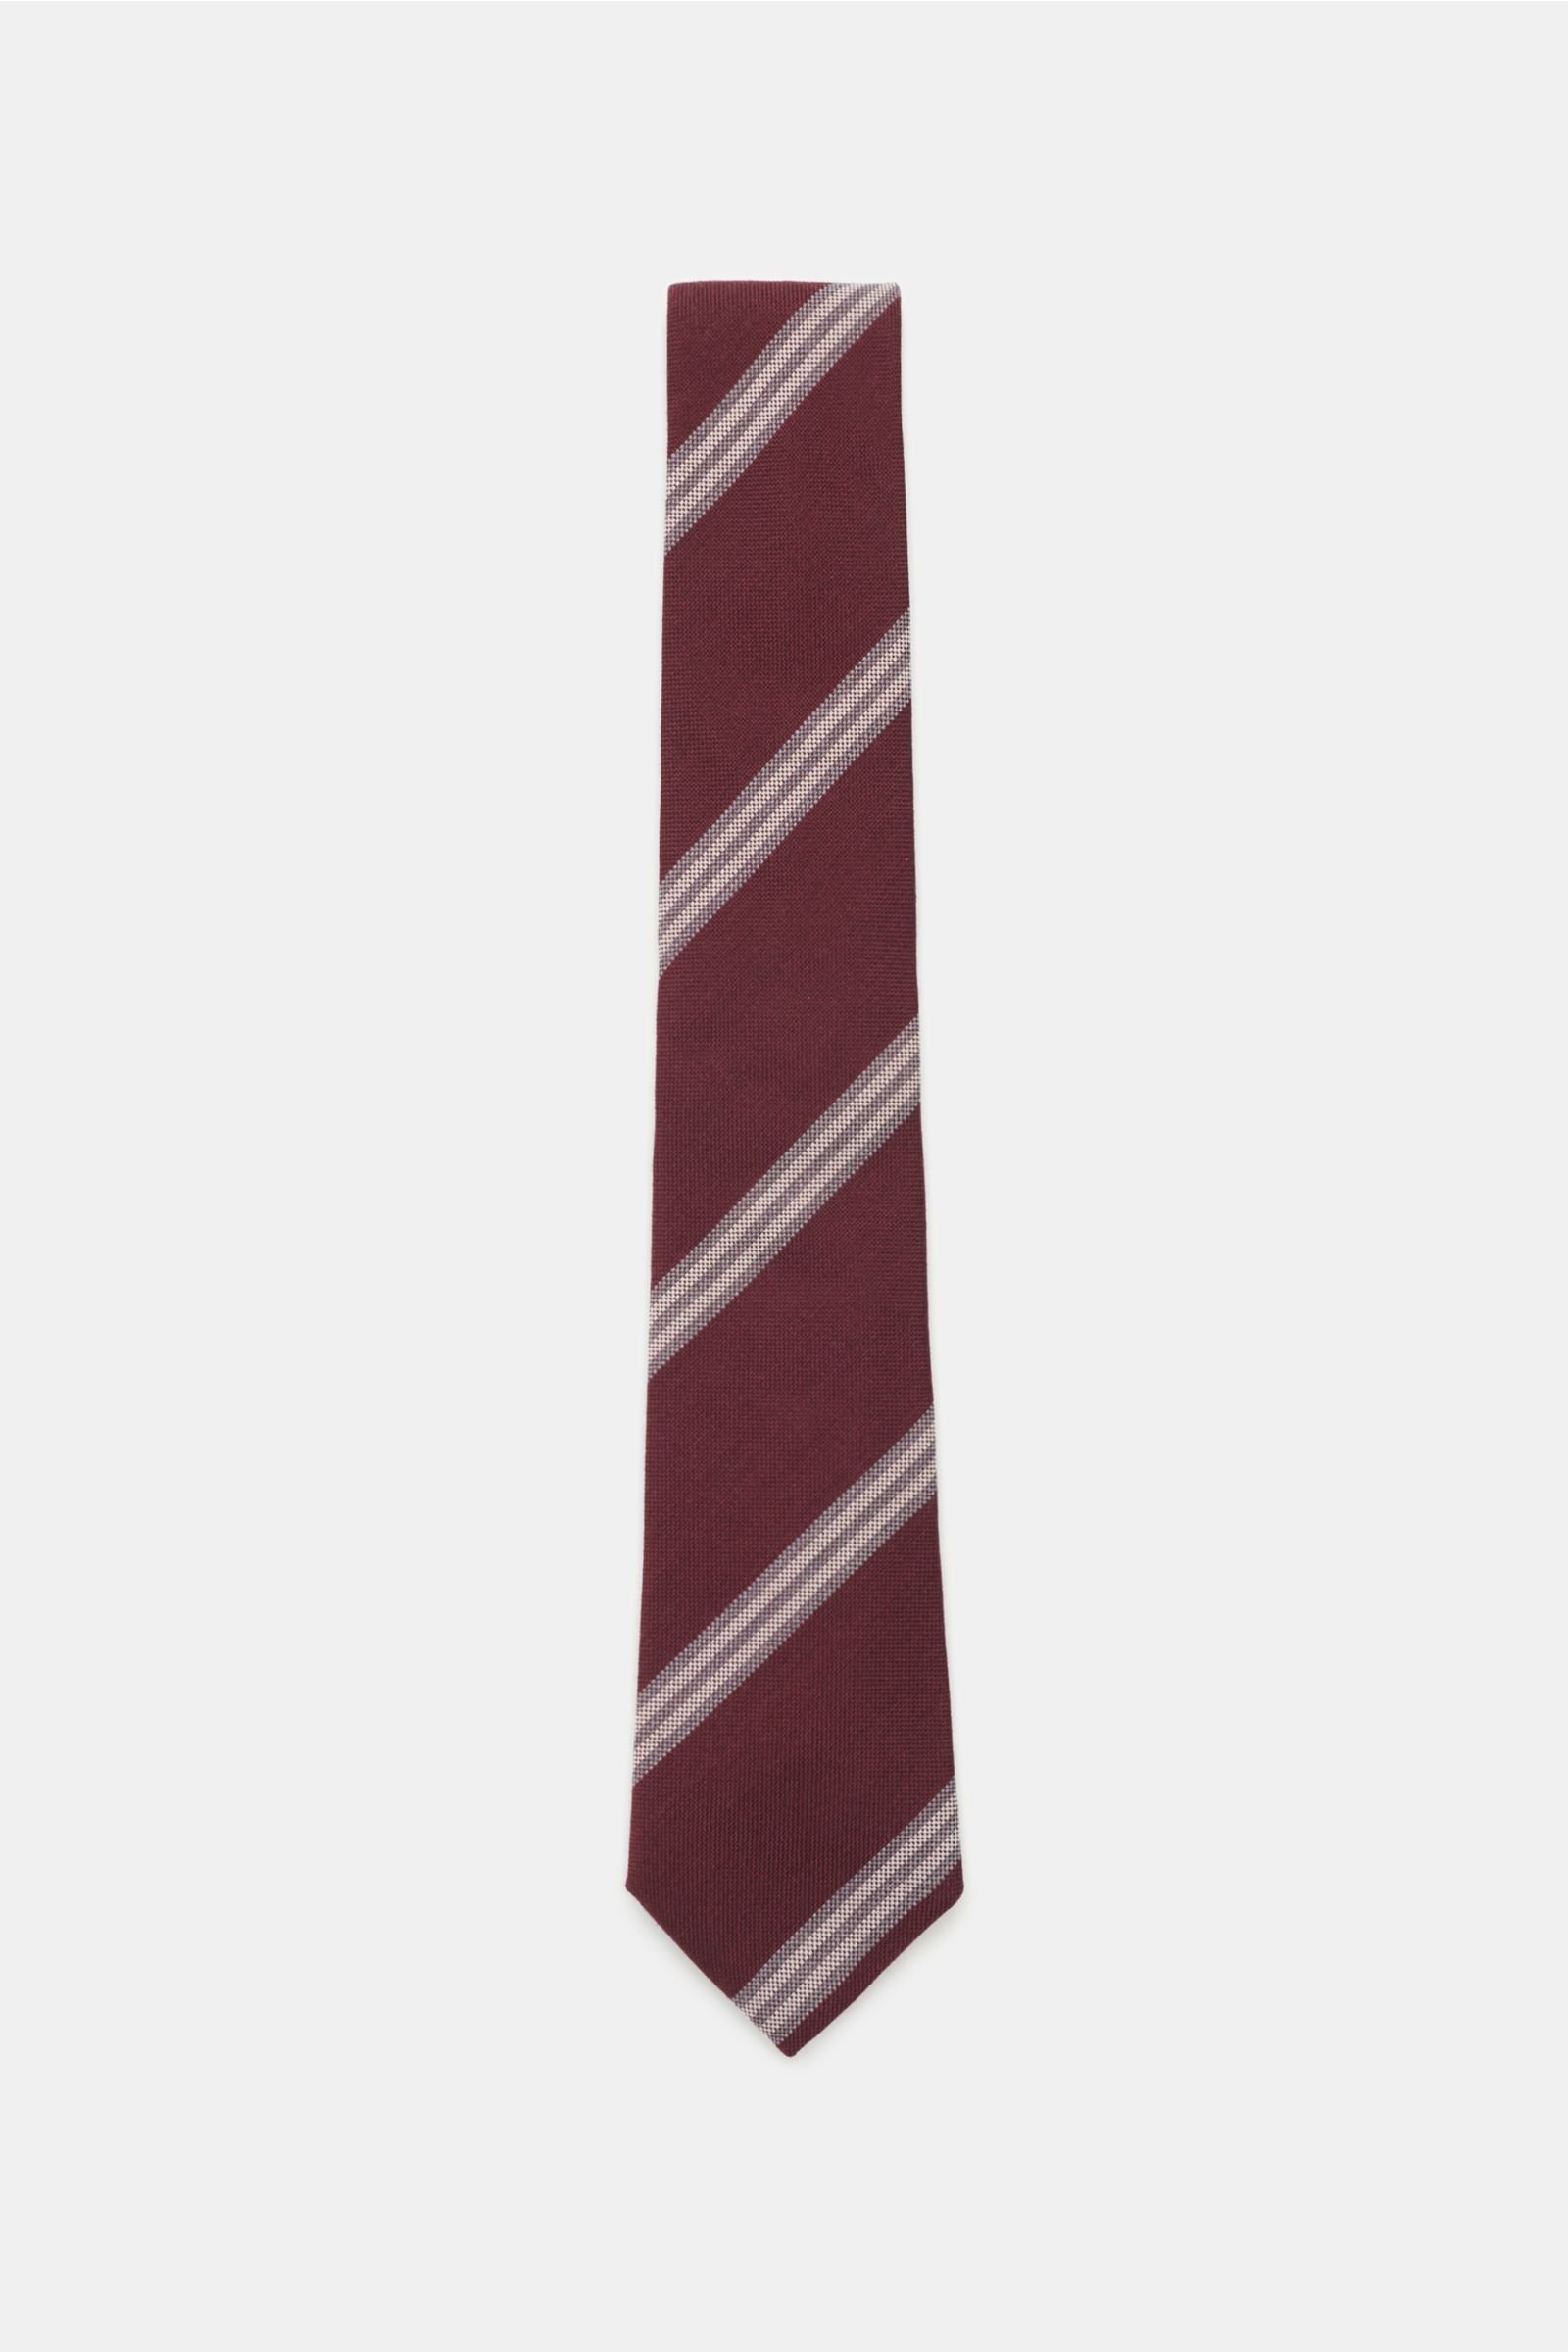 Tie burgundy striped